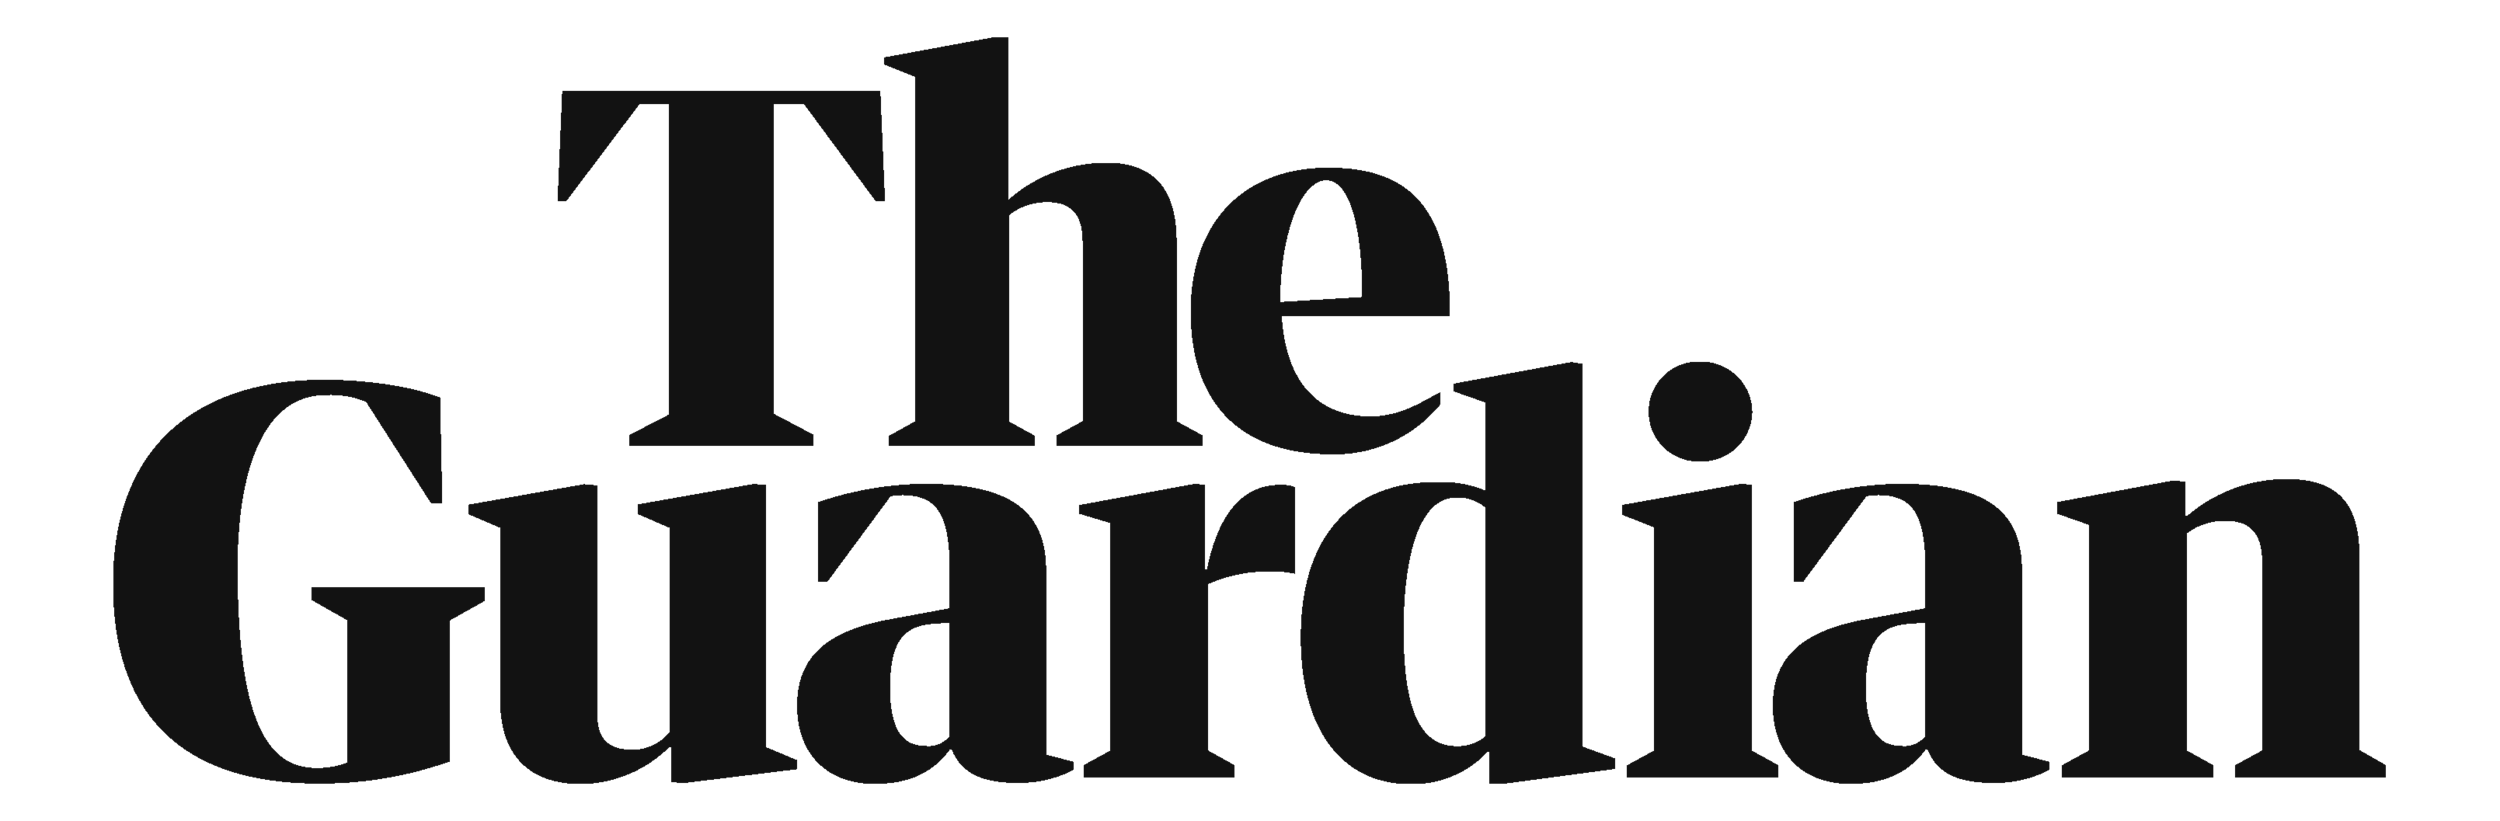 the-guardian-logo-2018 copy.png